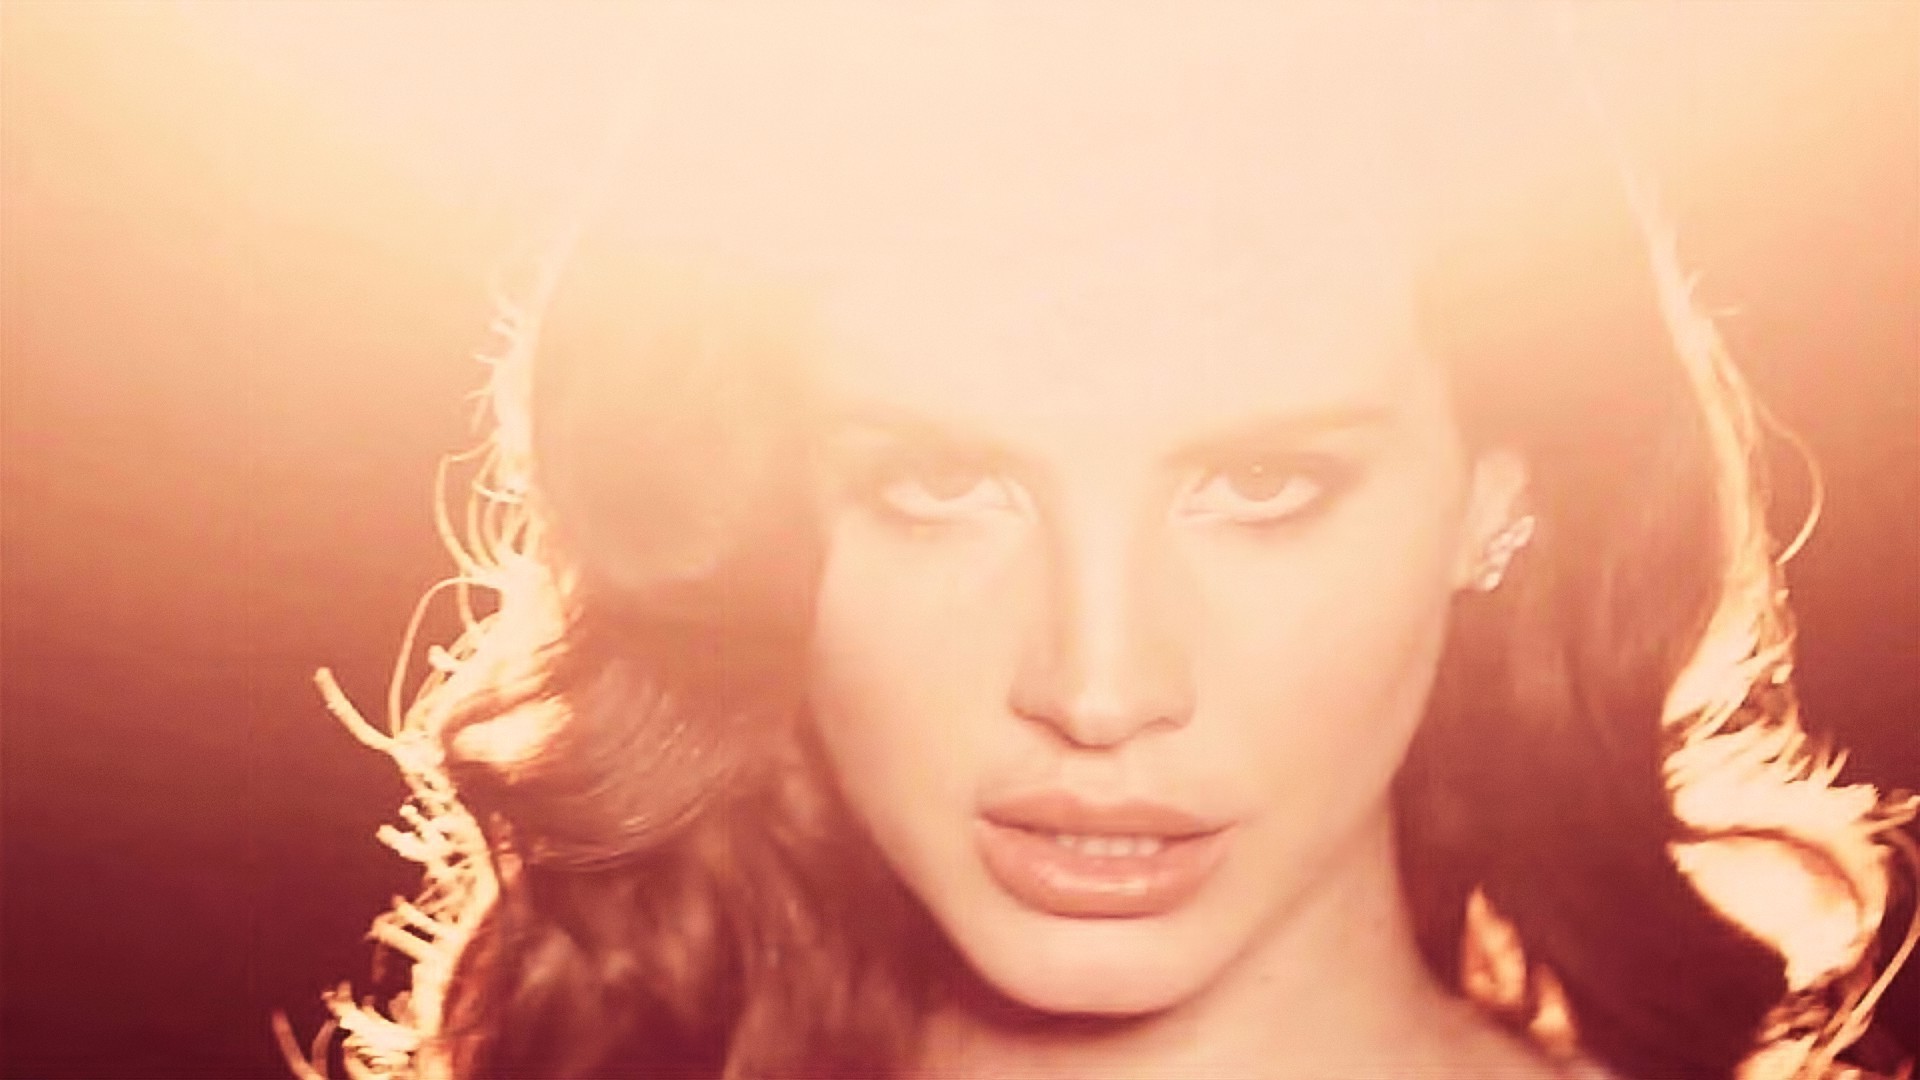 Lana Del Rey Wallpaper